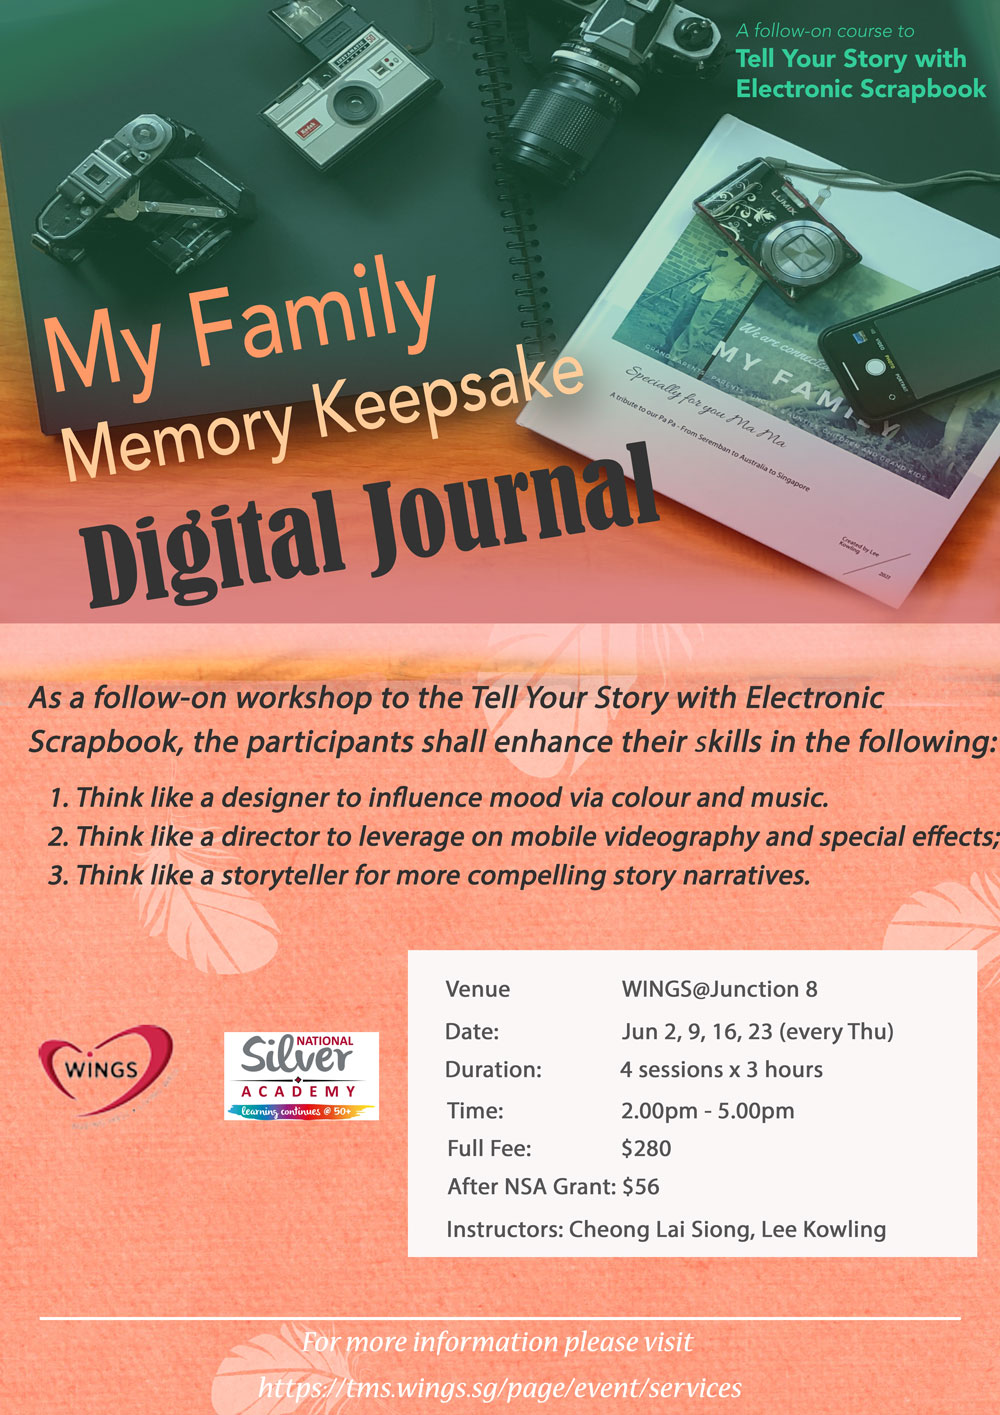 My-Family-Memory-Keepsake-with-Digital-Journal